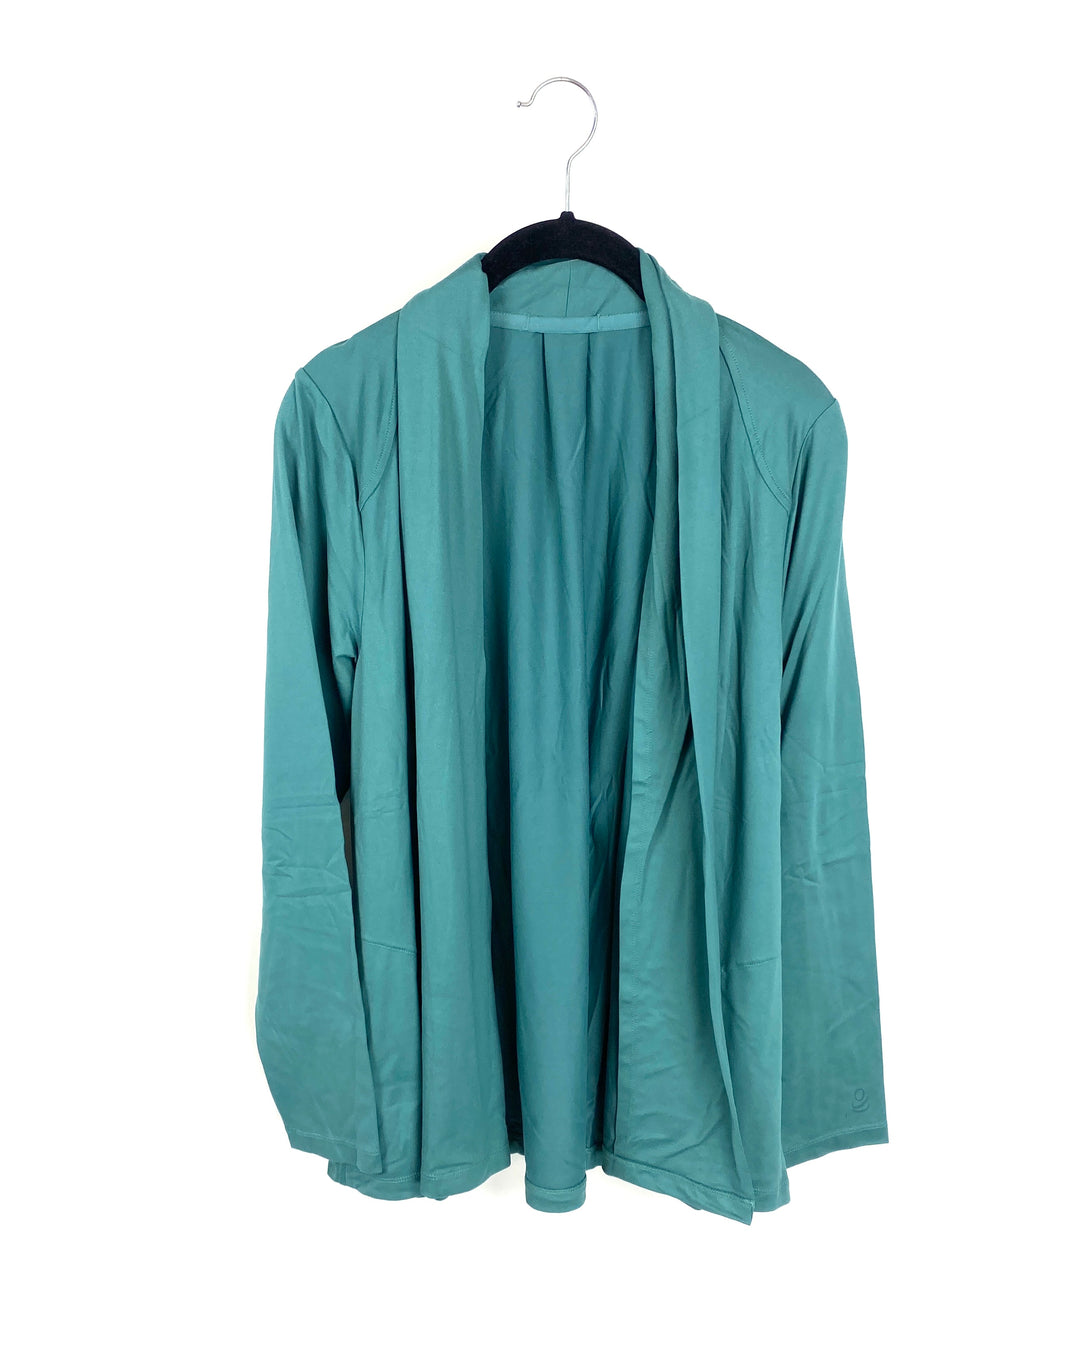 Teal Long Sleeve Cardigan - Size 6/8